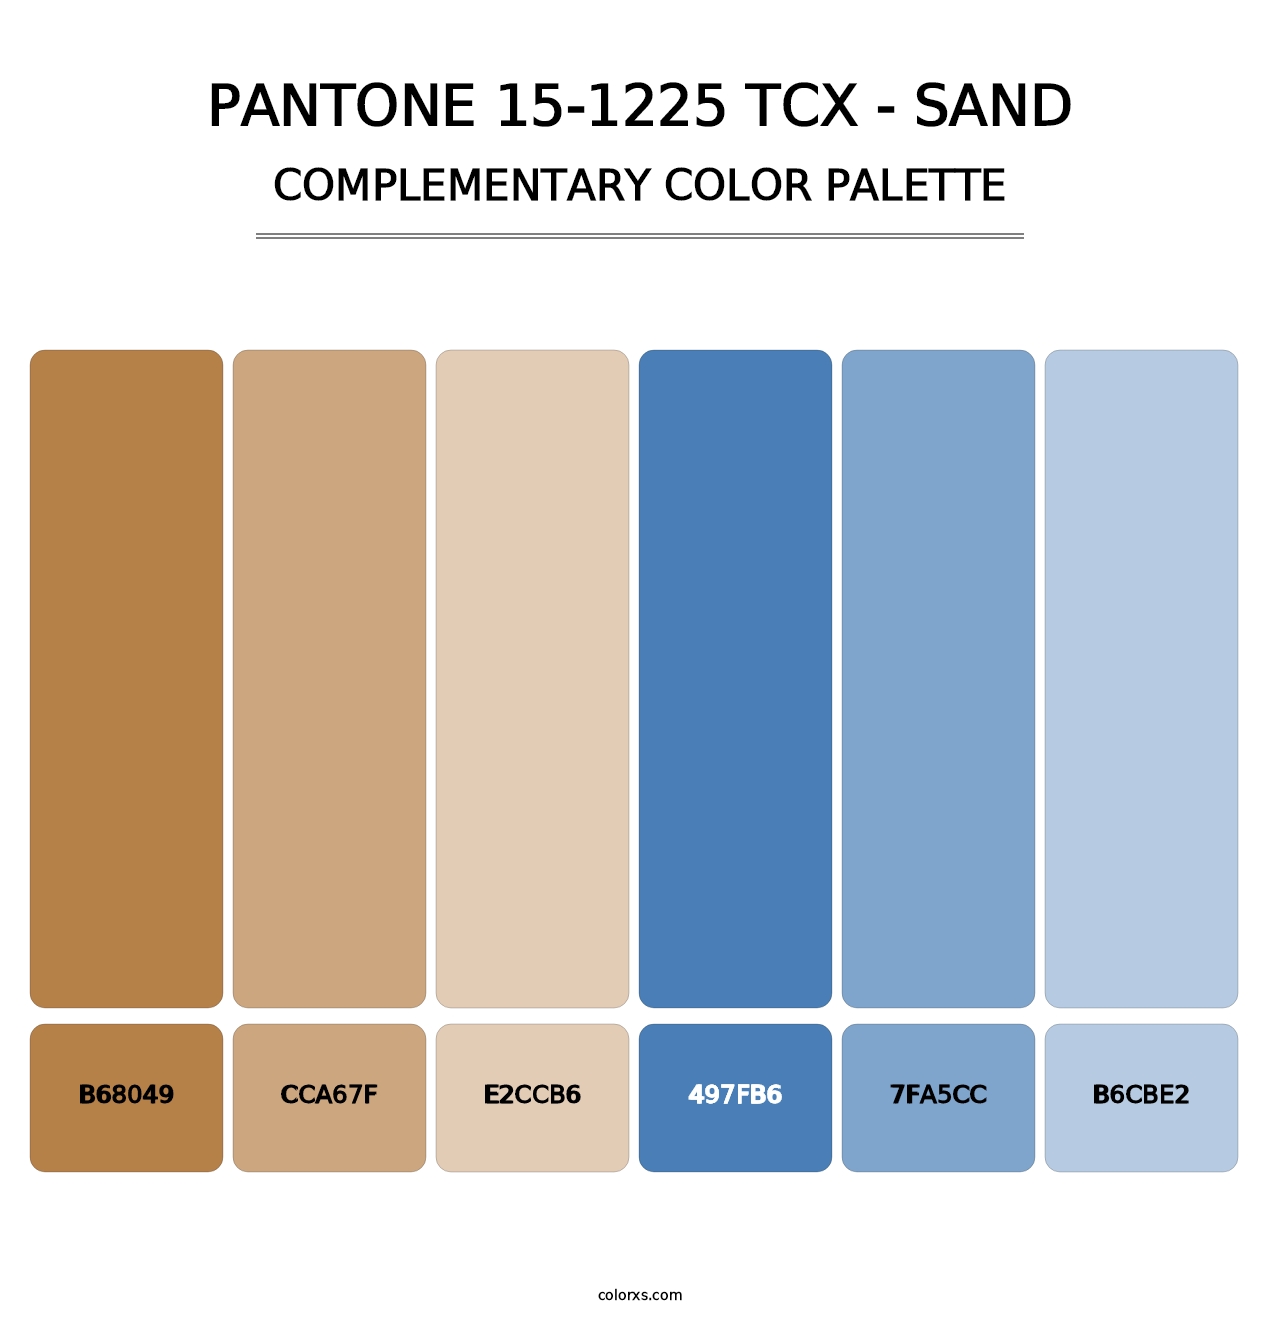 PANTONE 15-1225 TCX - Sand - Complementary Color Palette